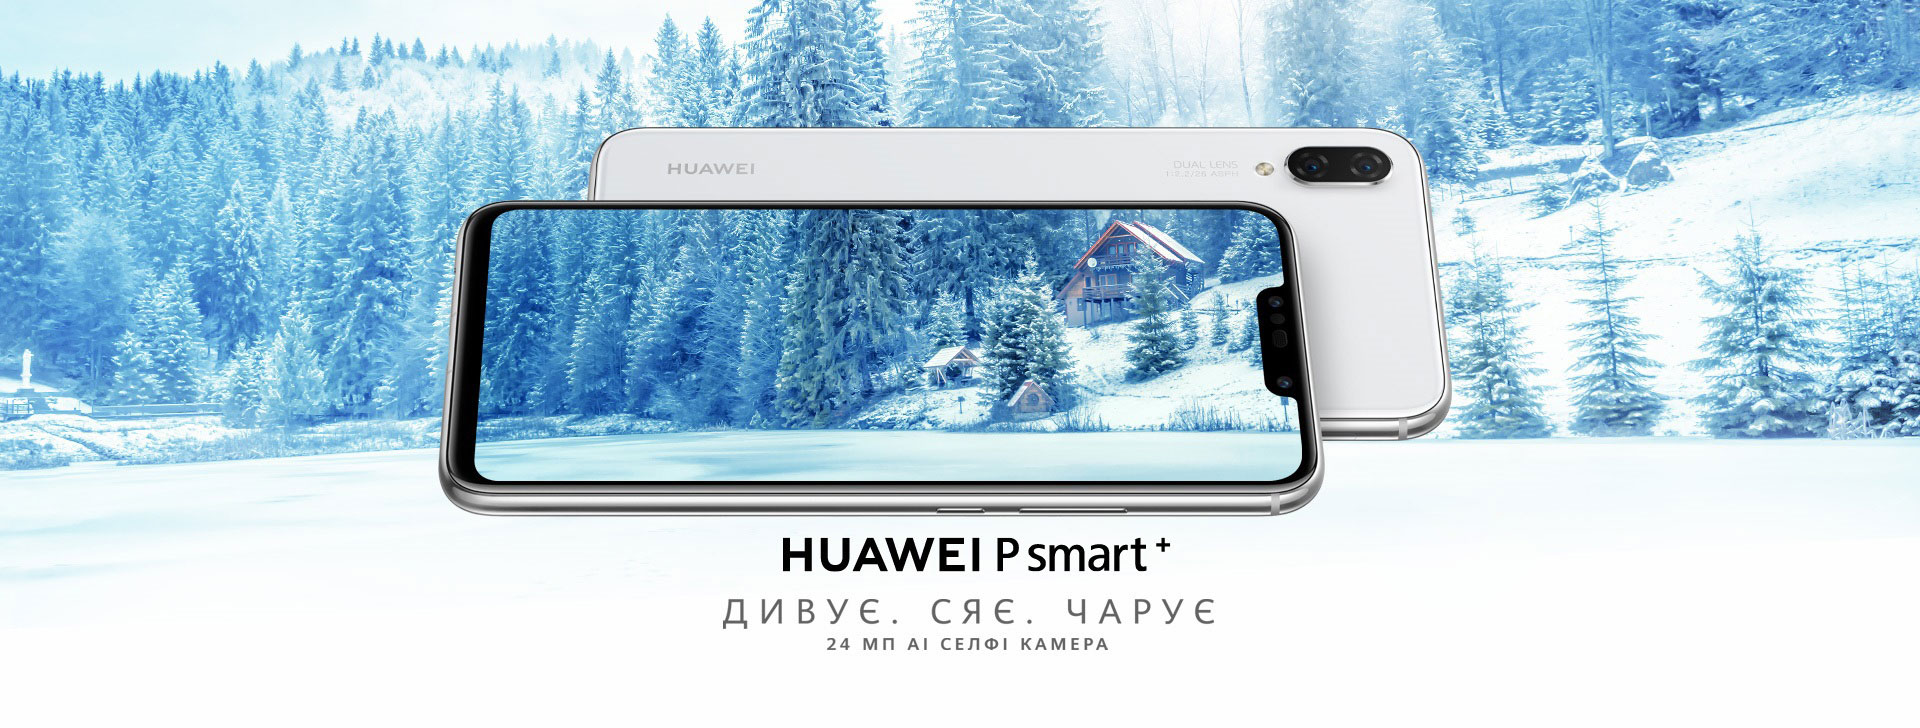 HUAWEI P smart Plus